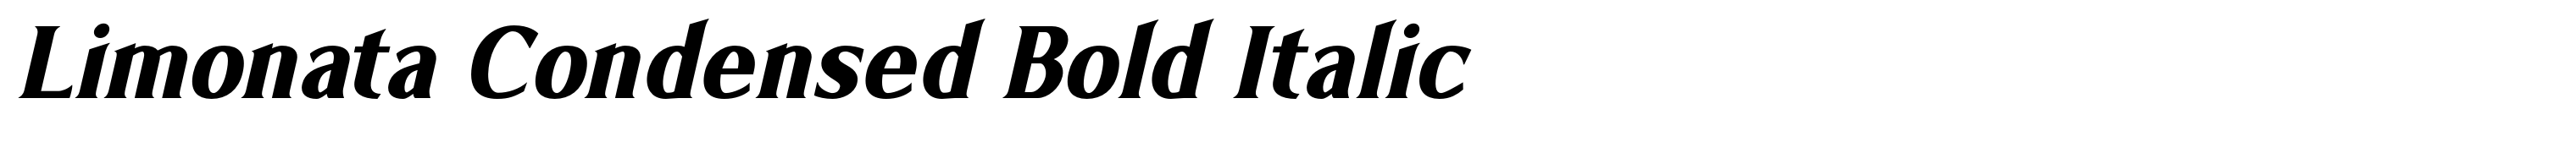 Limonata Condensed Bold Italic